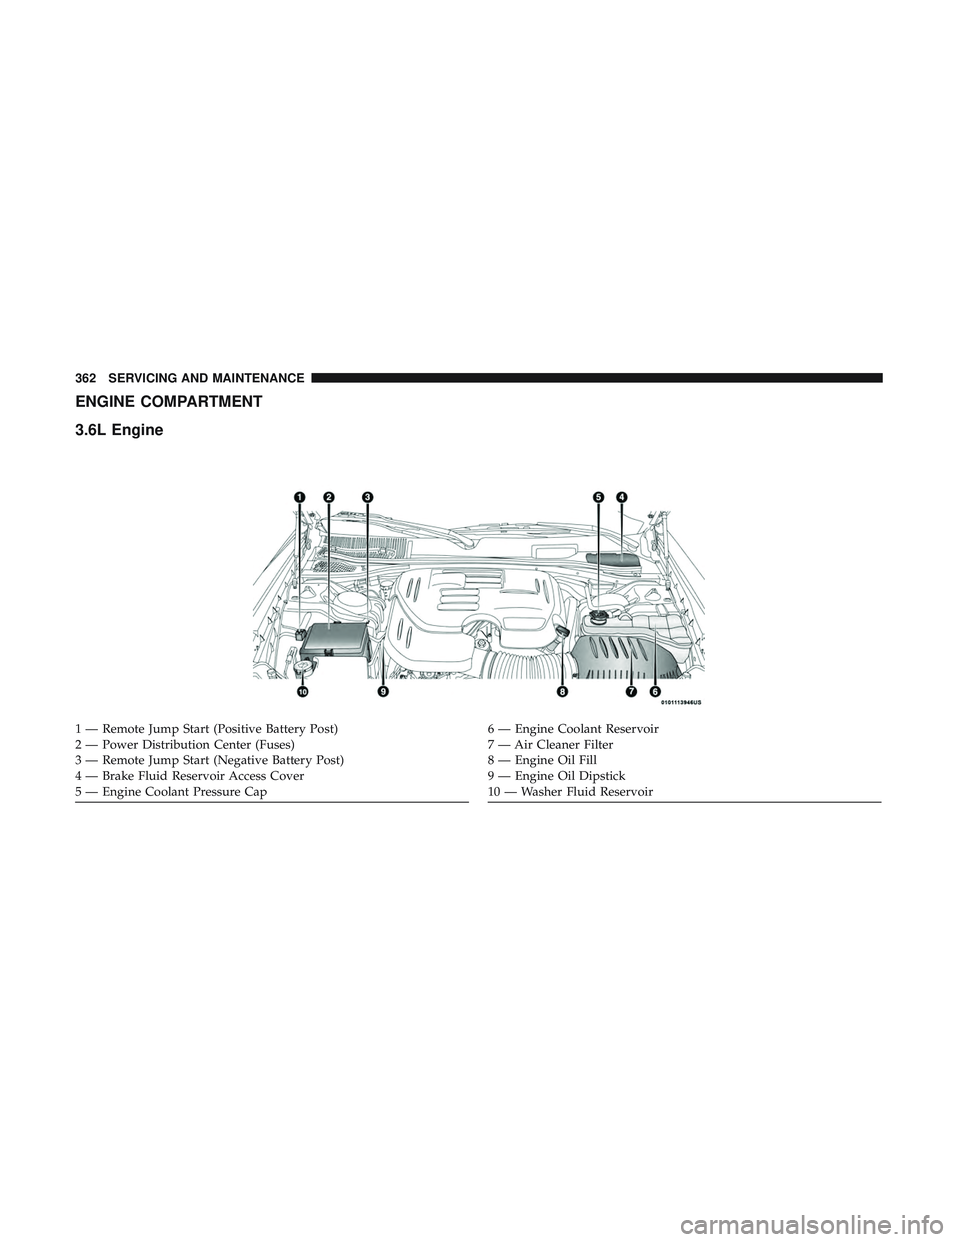 DODGE CHARGER 2018  Owners Manual ENGINE COMPARTMENT
3.6L Engine
1 — Remote Jump Start (Positive Battery Post)
2 — Power Distribution Center (Fuses)
3 — Remote Jump Start (Negative Battery Post)
4 — Brake Fluid Reservoir Acces